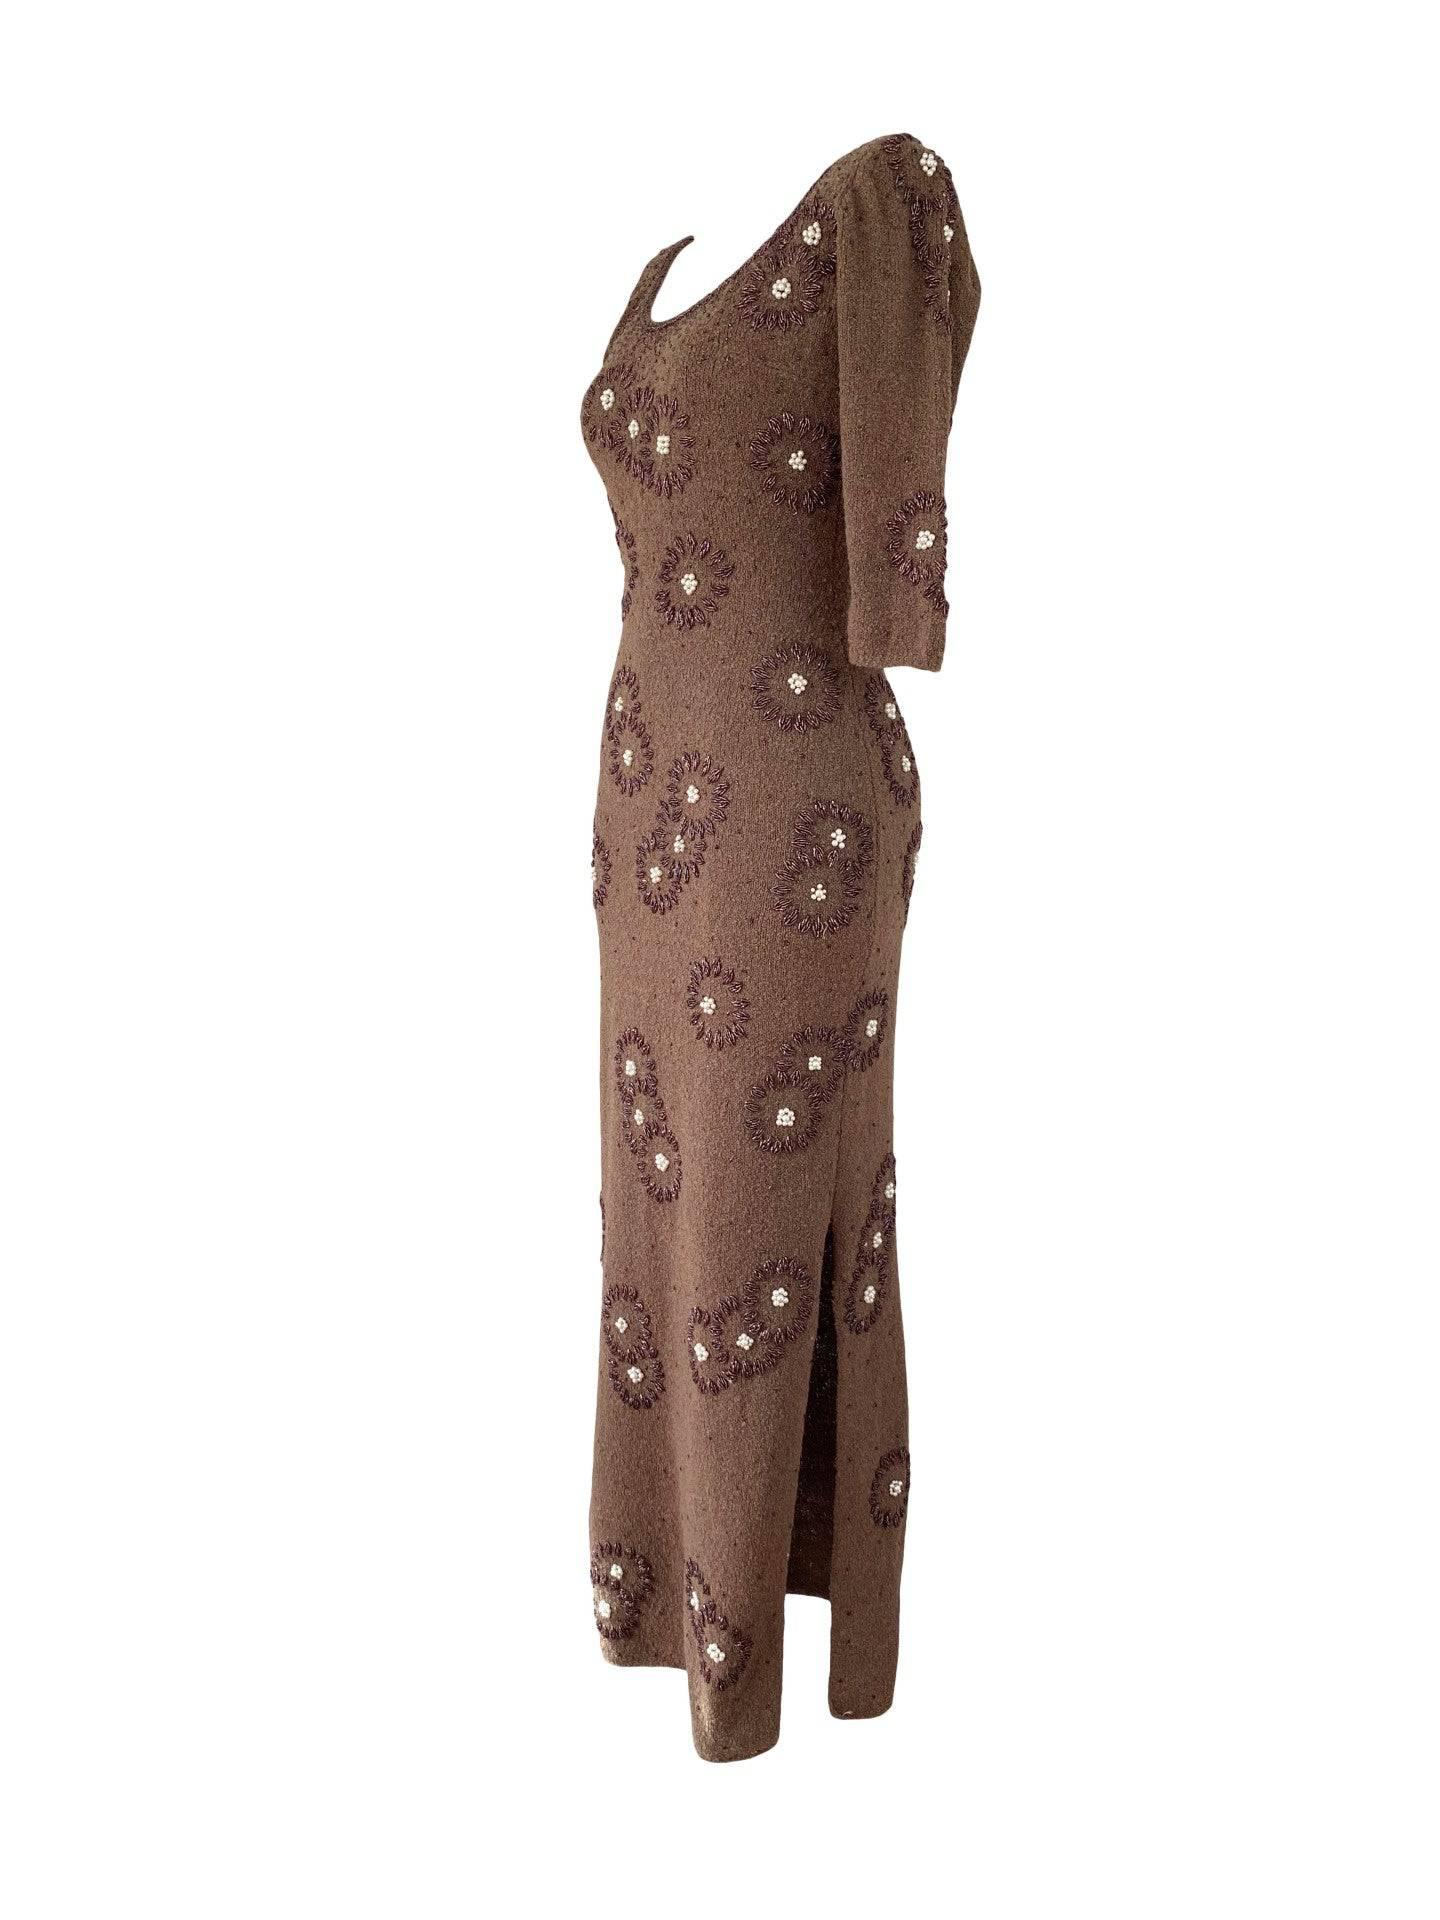 Women's Gene Shelly Vintage 1960s Mocha Brown Bouclé Pearls Wine Beads Wiggle Dress XS/S For Sale